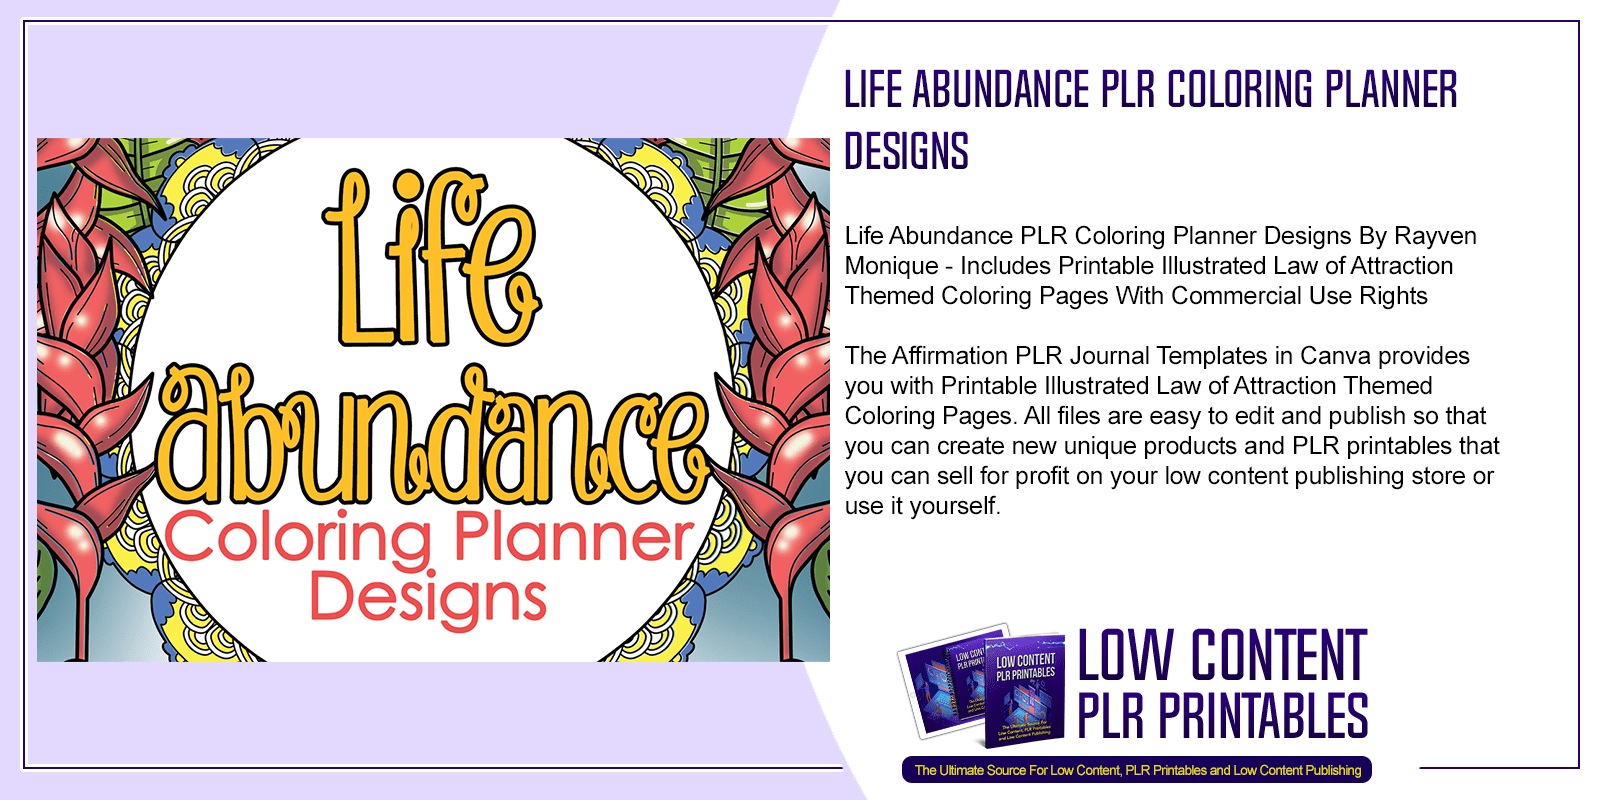 Life Abundance PLR Coloring Planner Designs